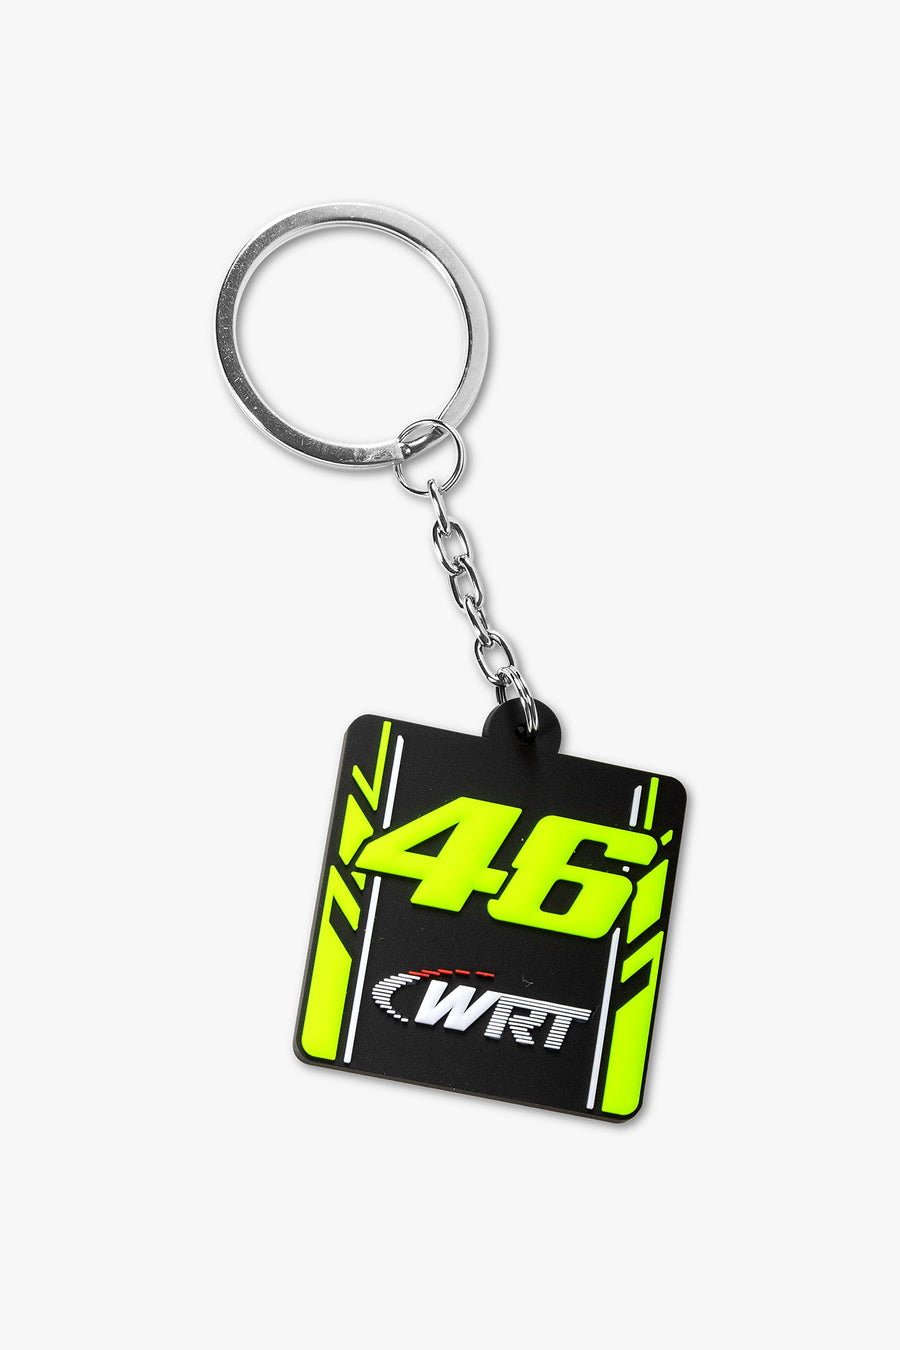 Porte clé Valentino Rossi n° 46 WRT